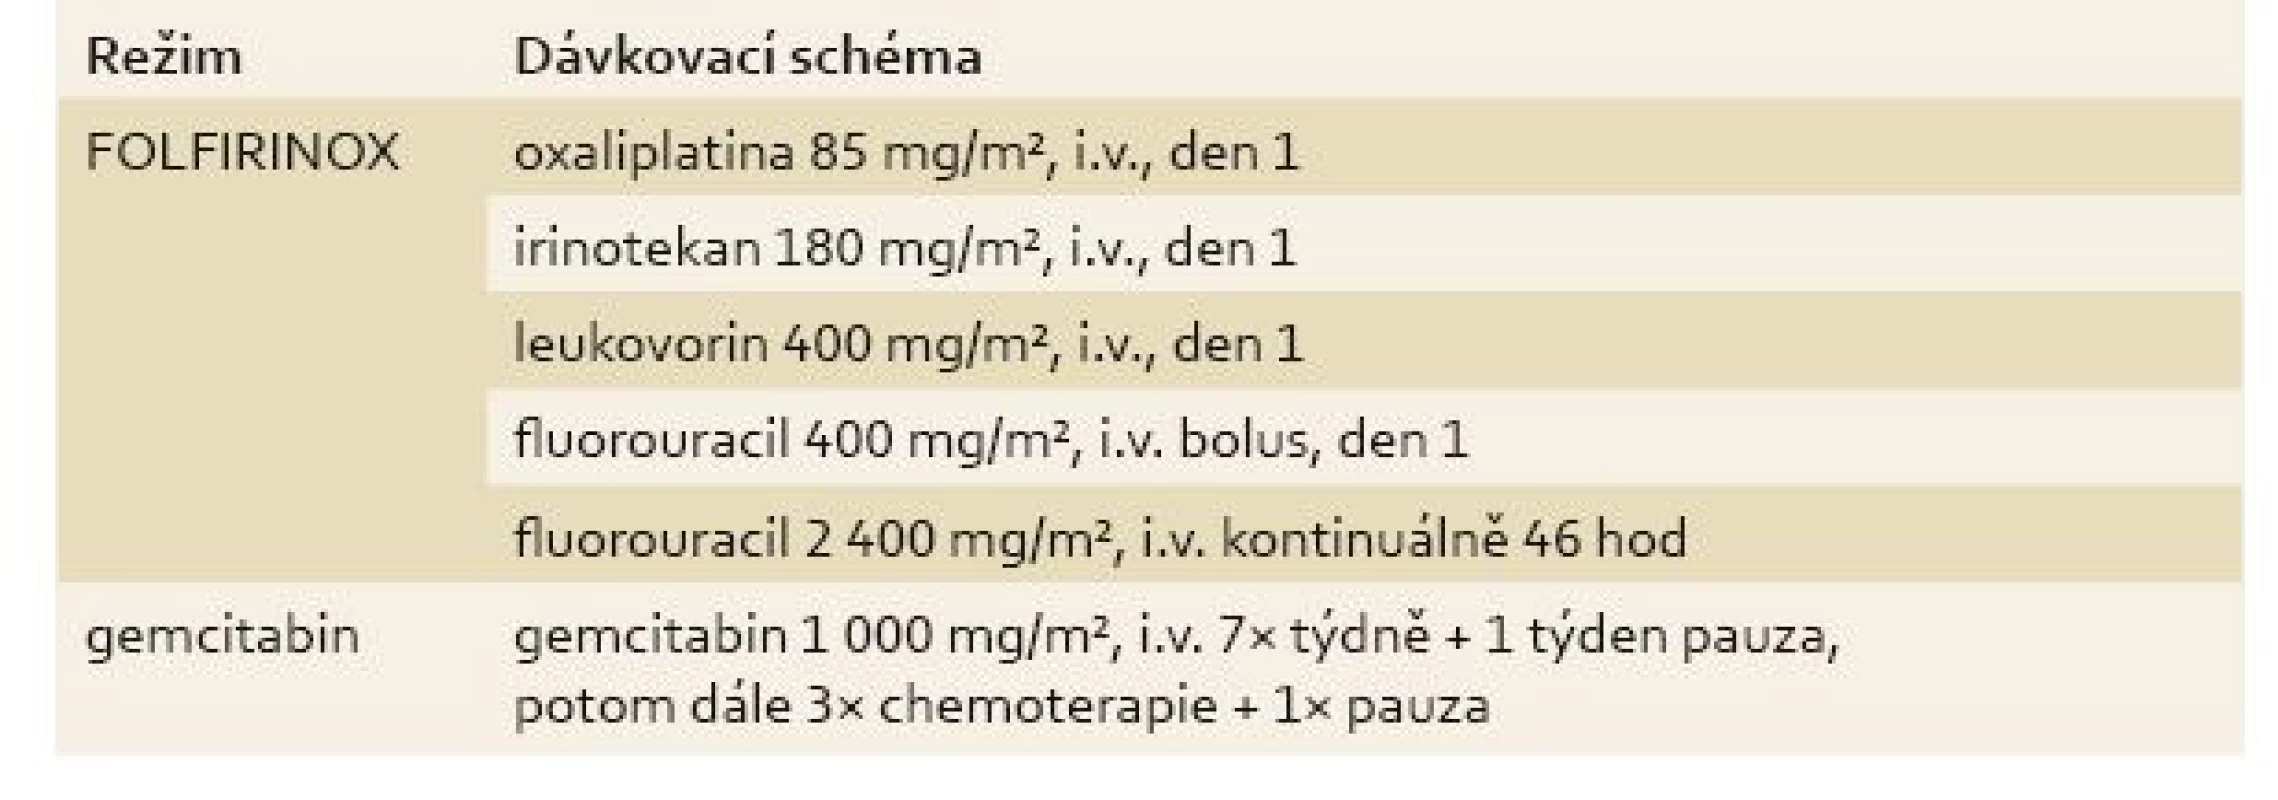 Dávkovací schéma použité v klinické studii PRODIGE 4/ACCORD 11.
Tab. 1. The dosing schedule used in clinical trial PRODIGE 4/ACCORD 11.